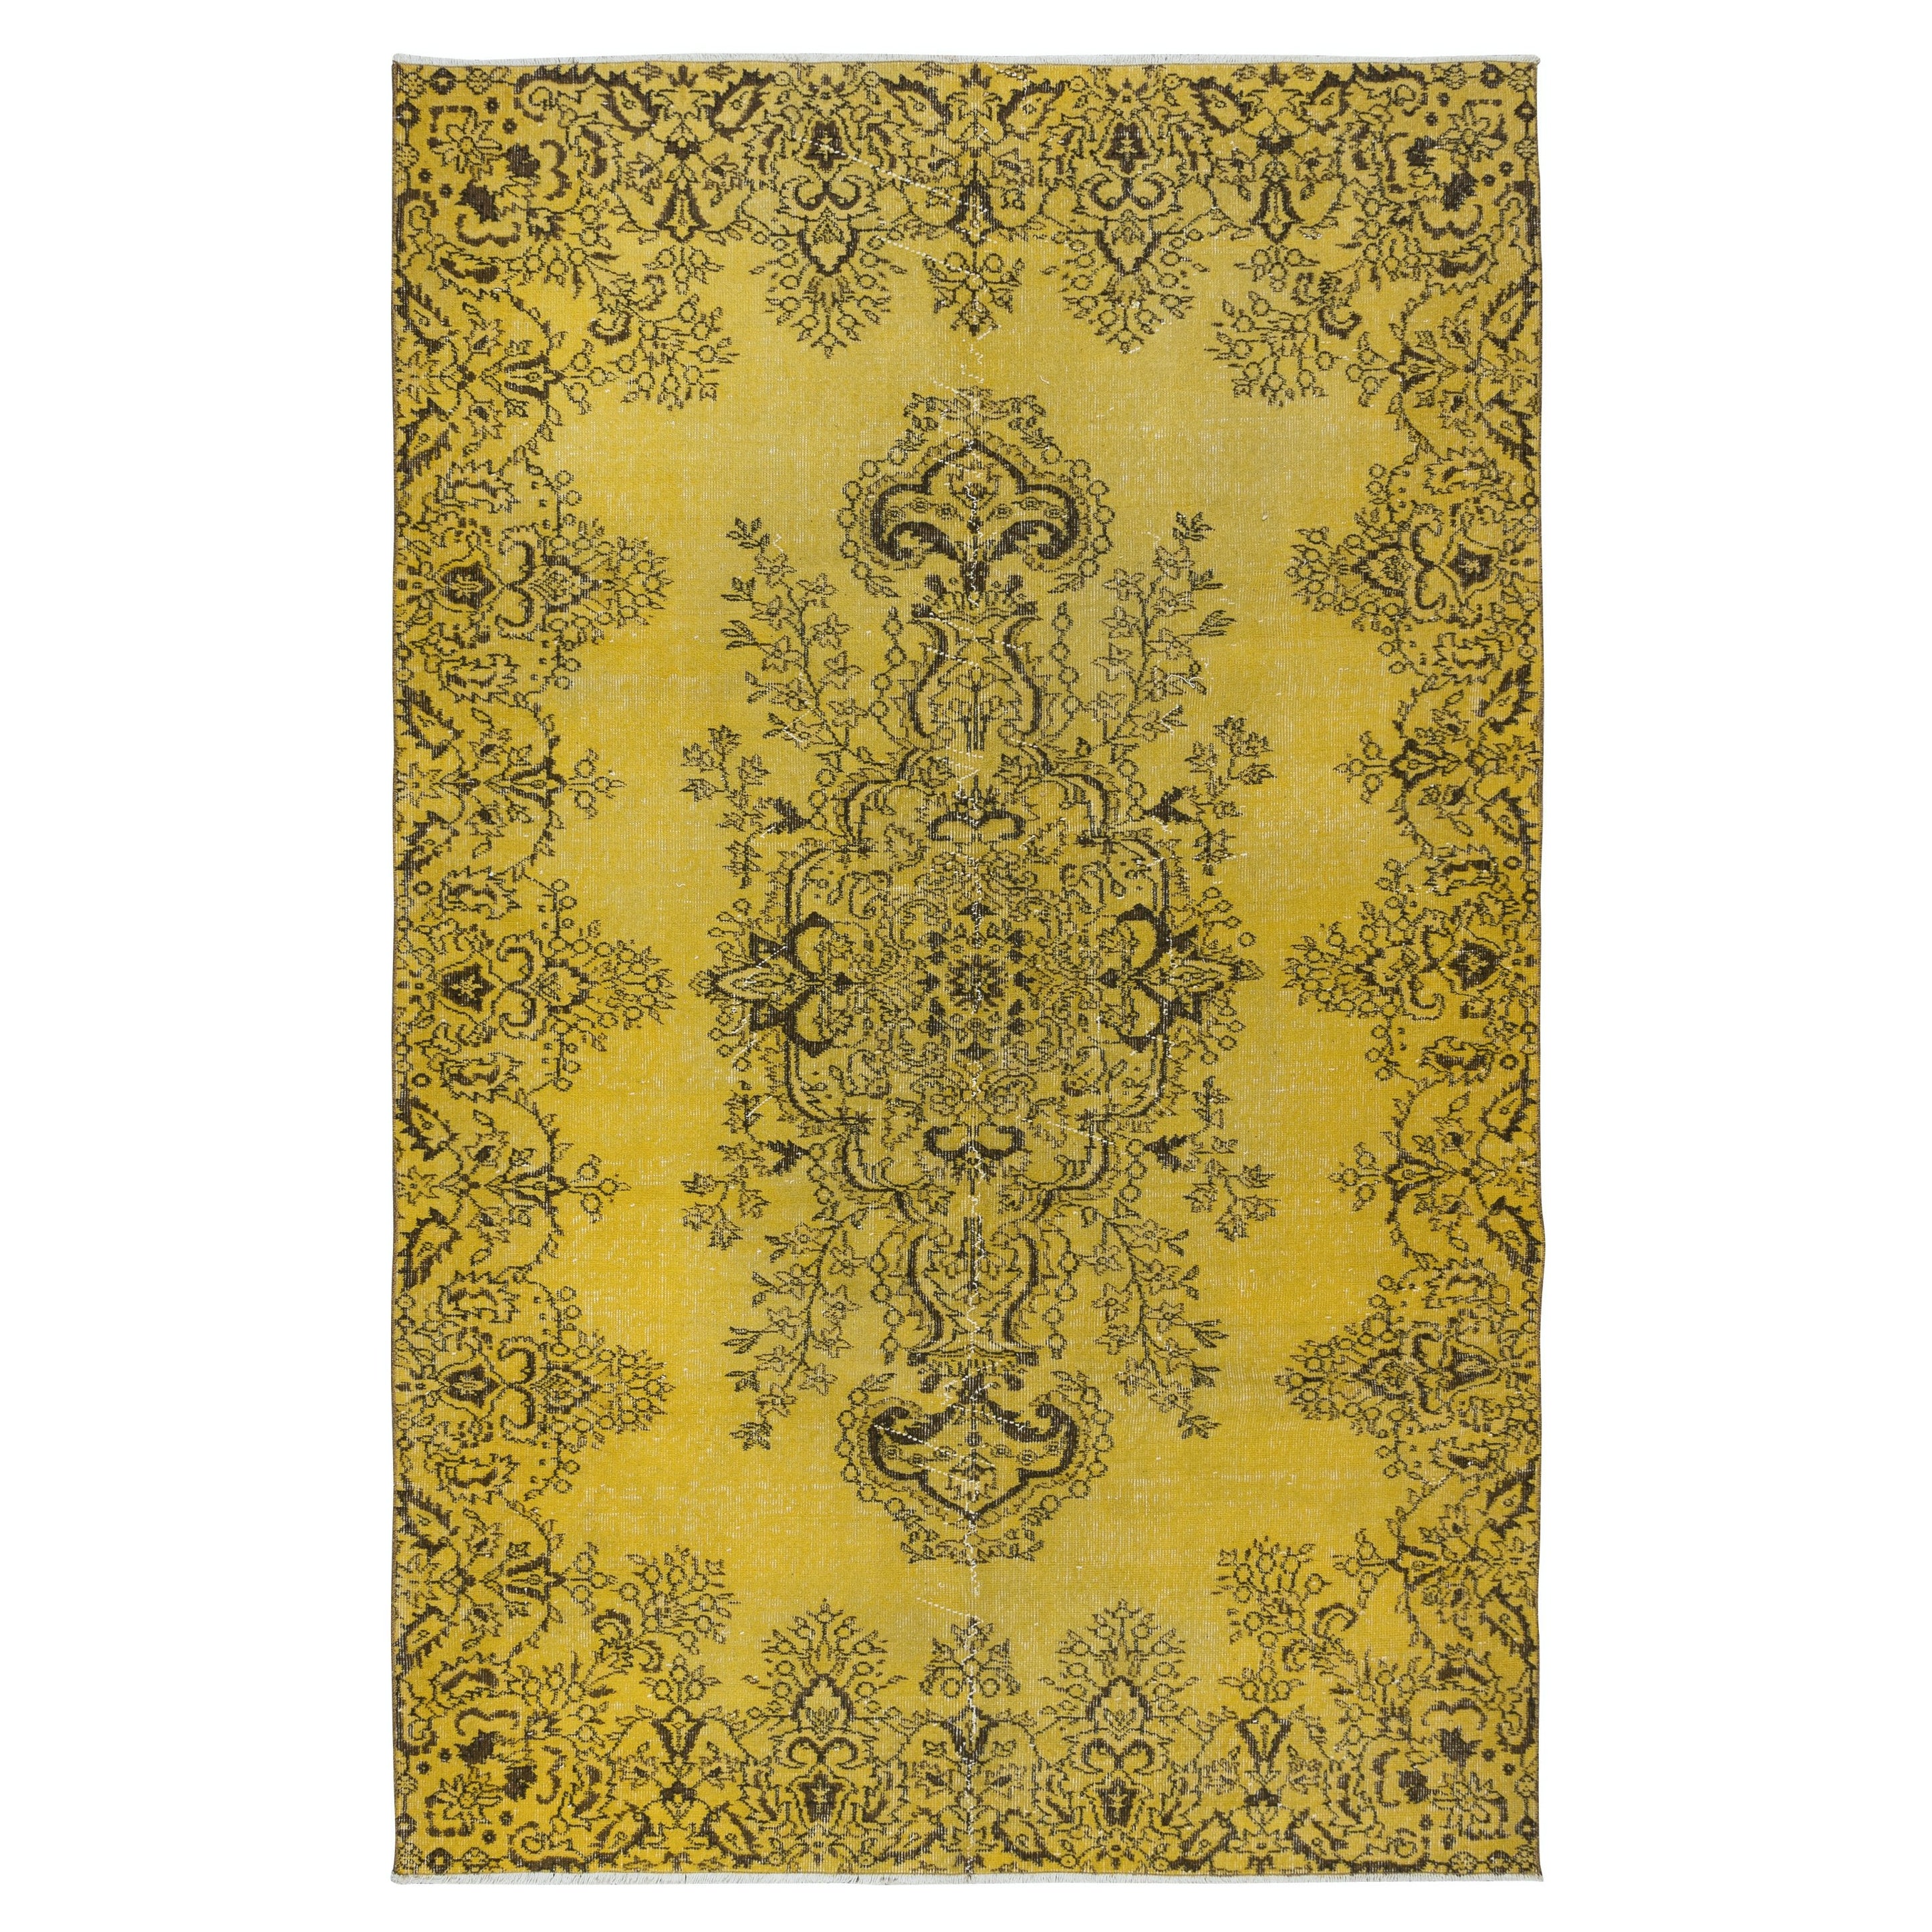 6x9.5 Ft Yellow Handmade Area Rug for Modern Interiors, Vintage Turkish Carpet